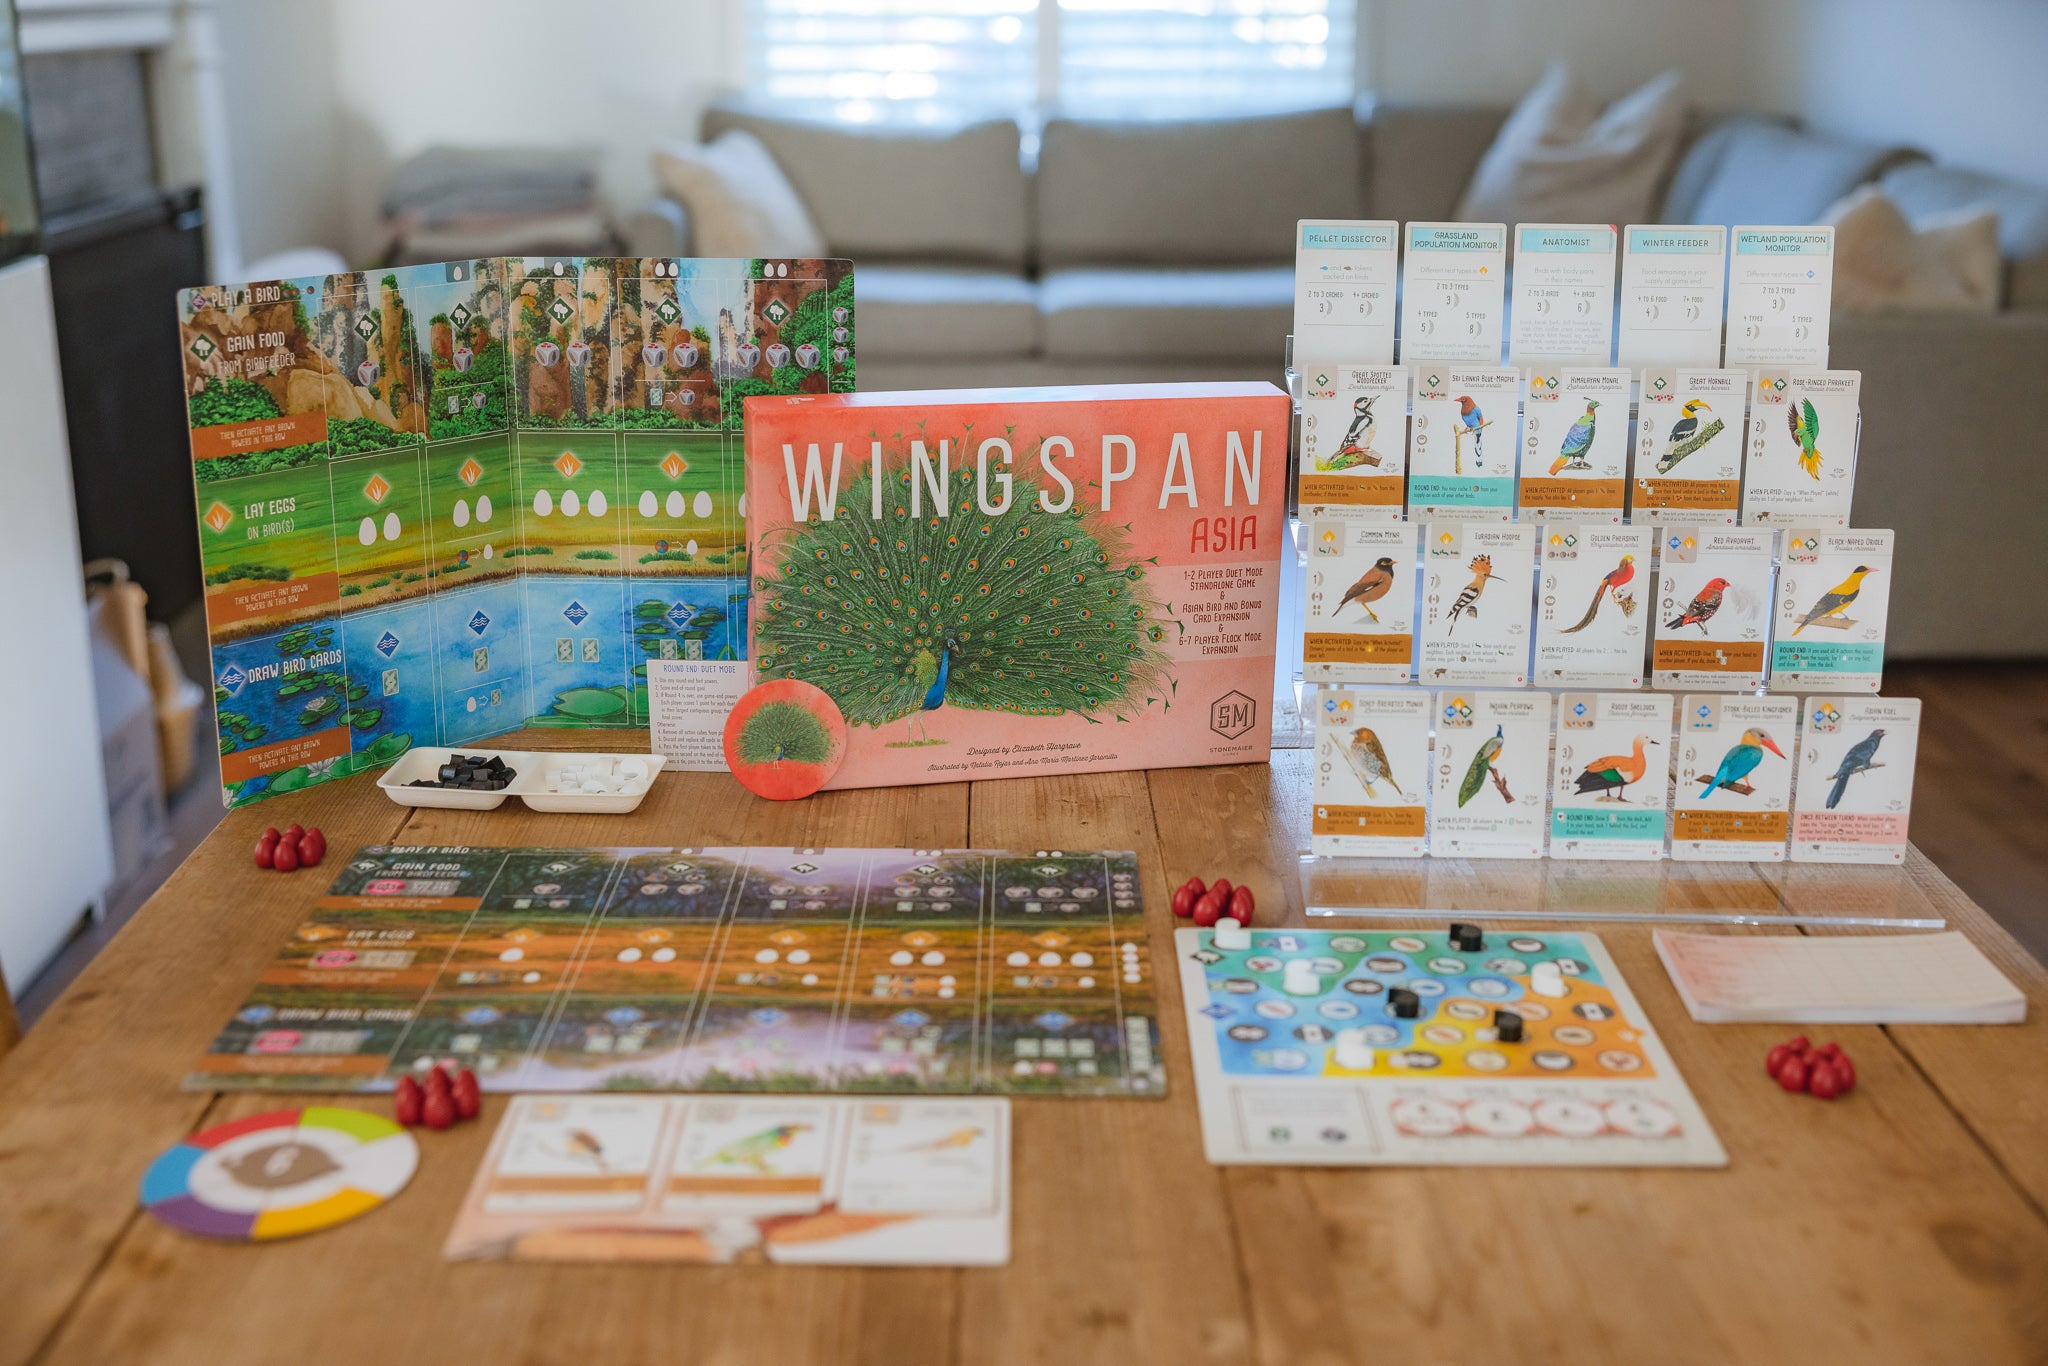 Wingspan Nesting Box – Stonemaier Games